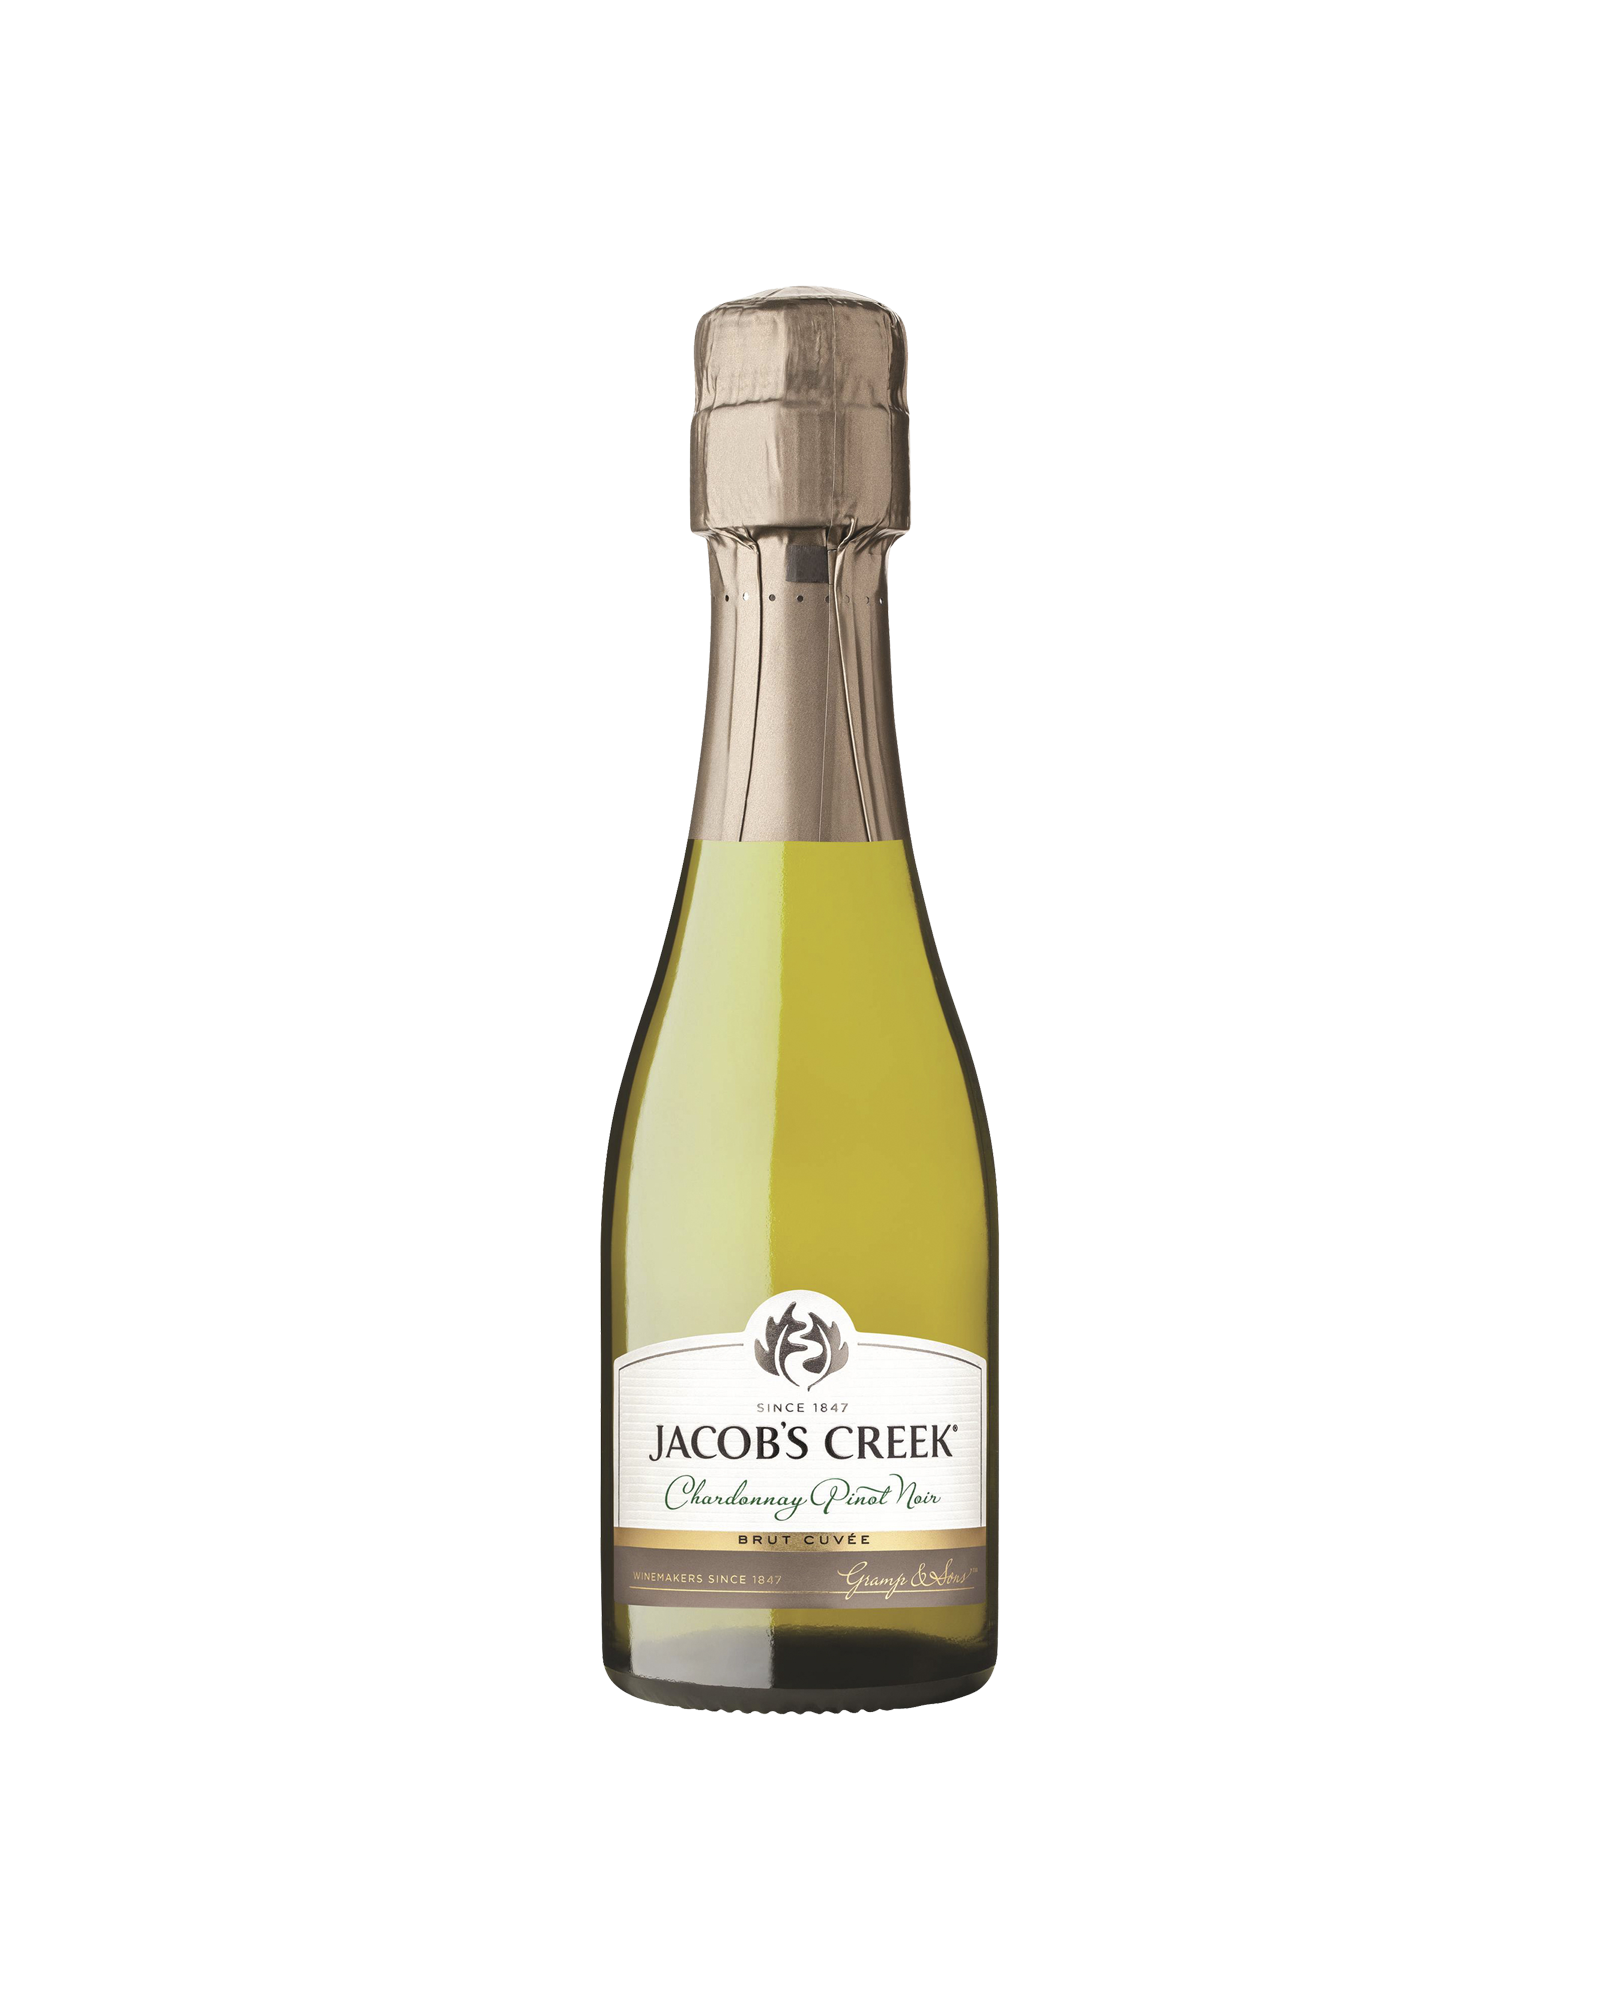 Jacob’s Creek Chardonnay Pinot Noir 200mL